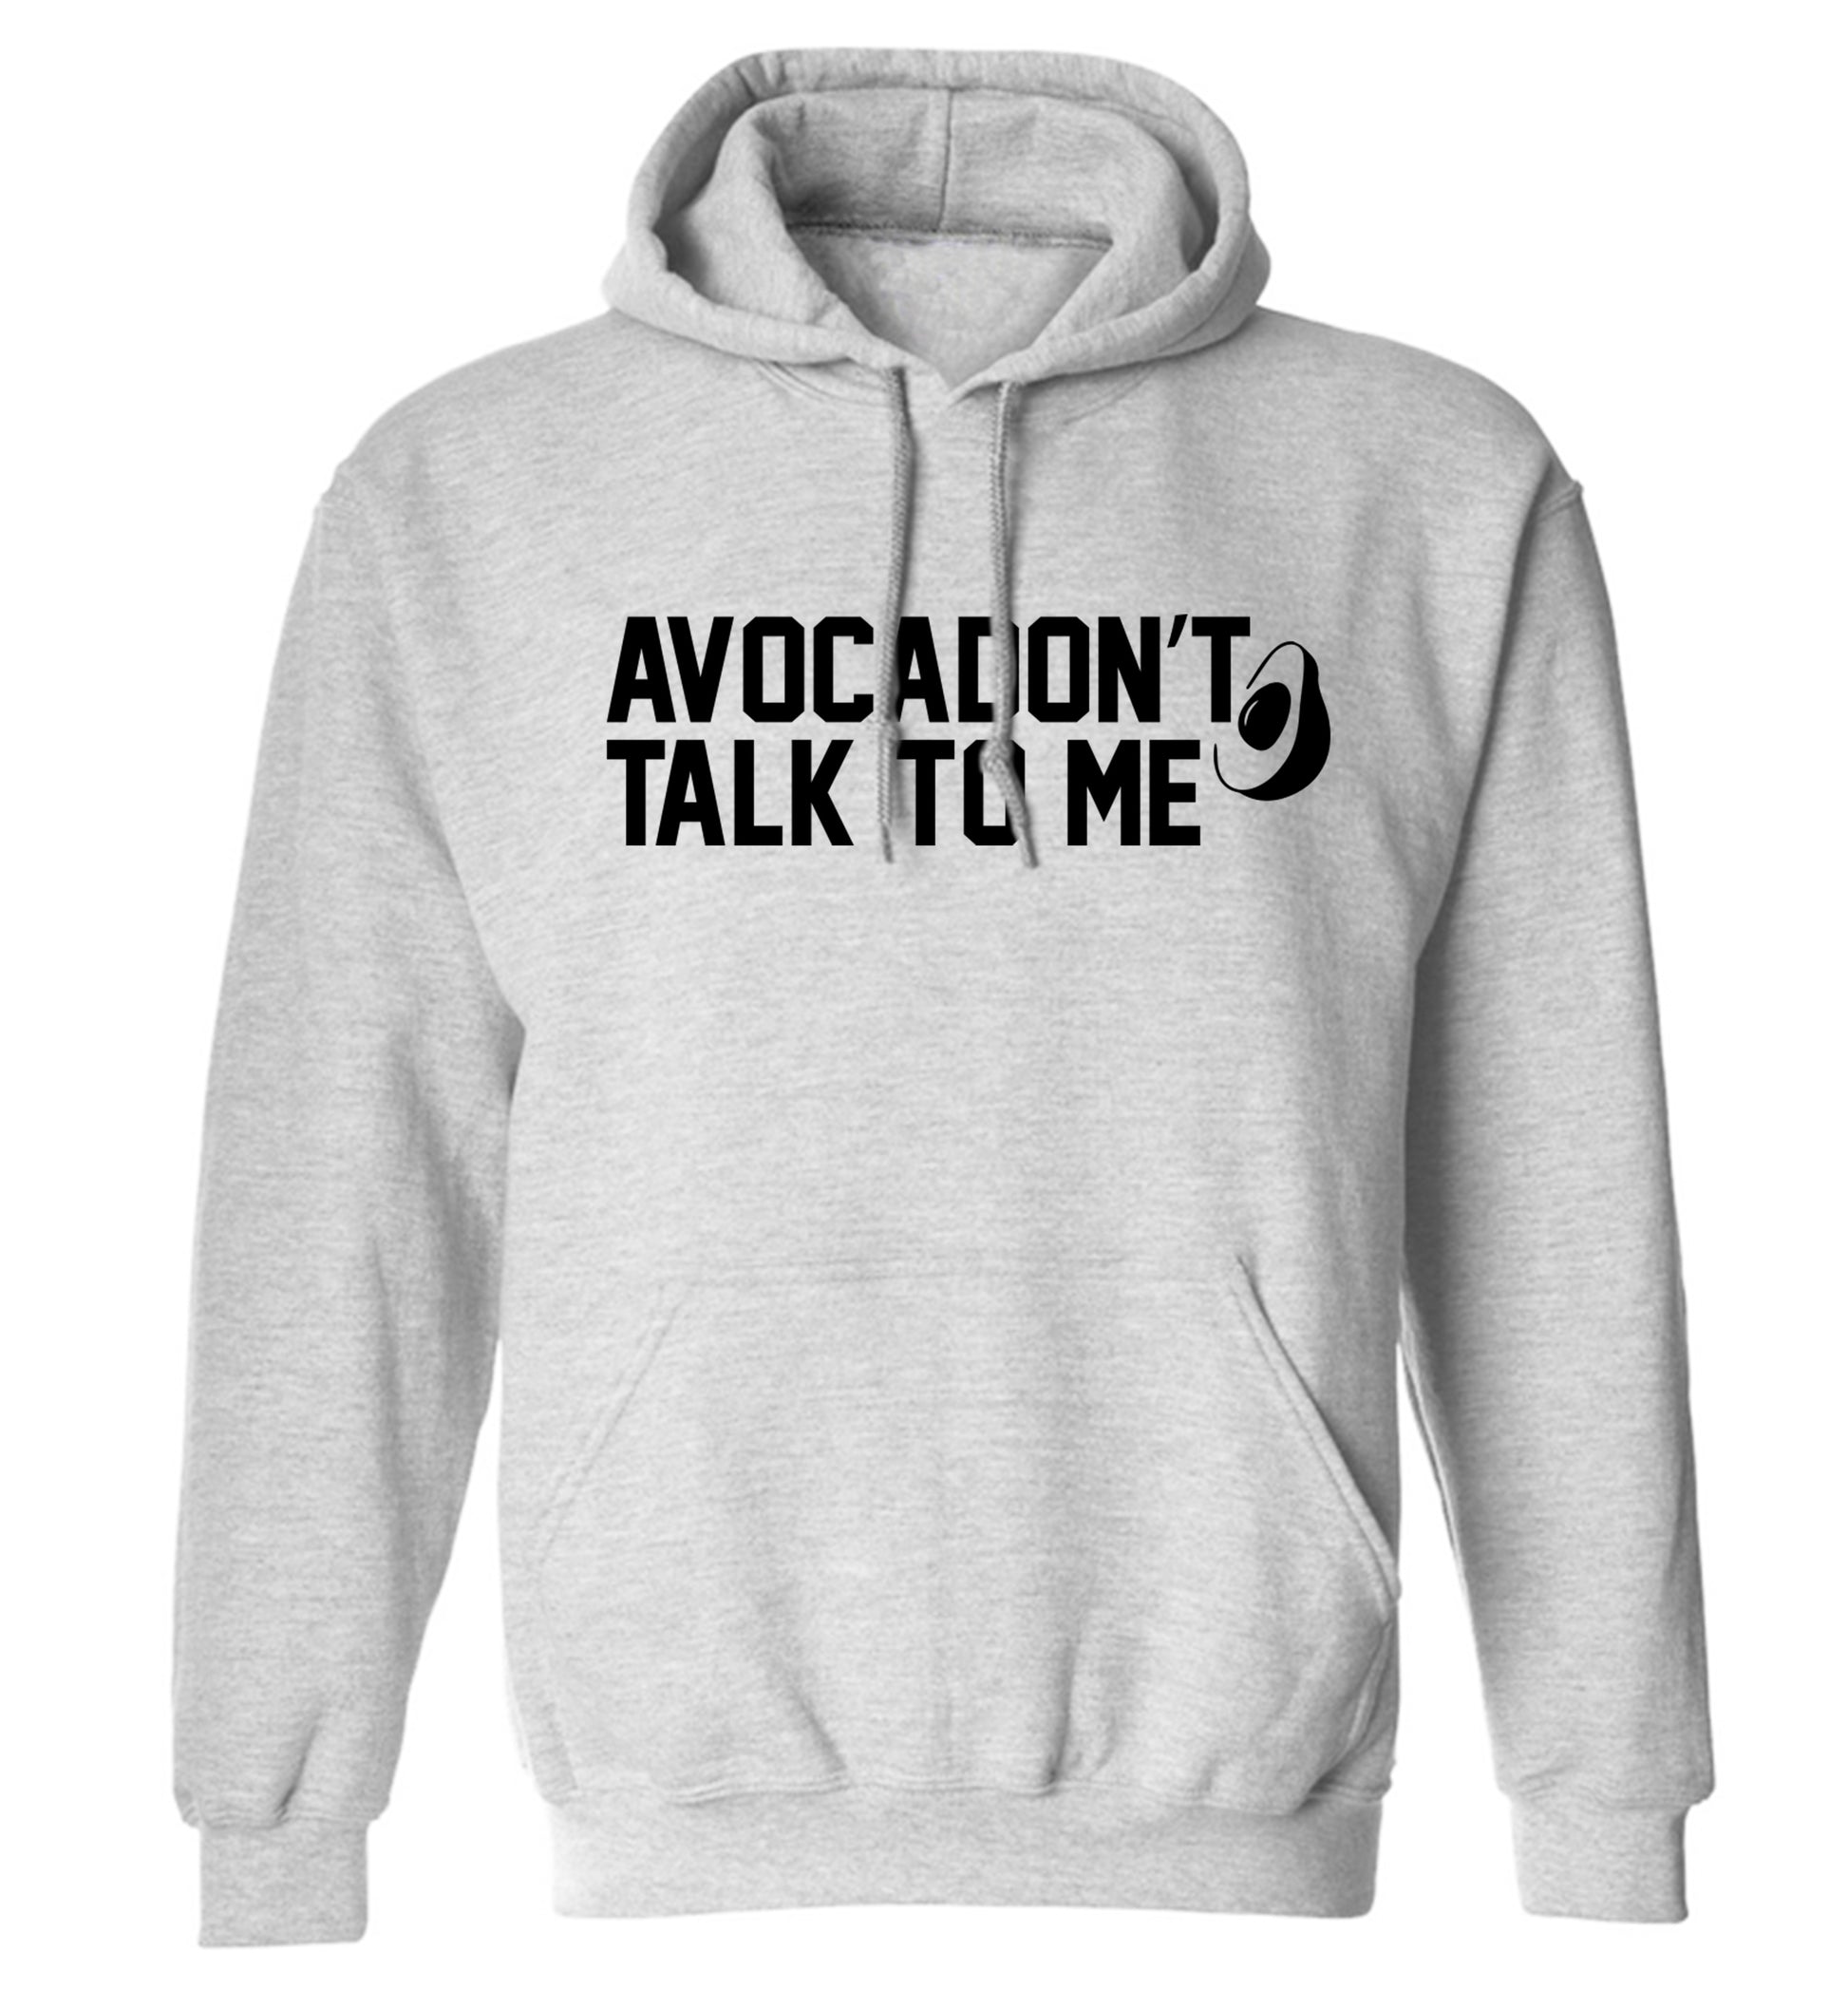 Avocadon't talk to me adults unisex grey hoodie 2XL